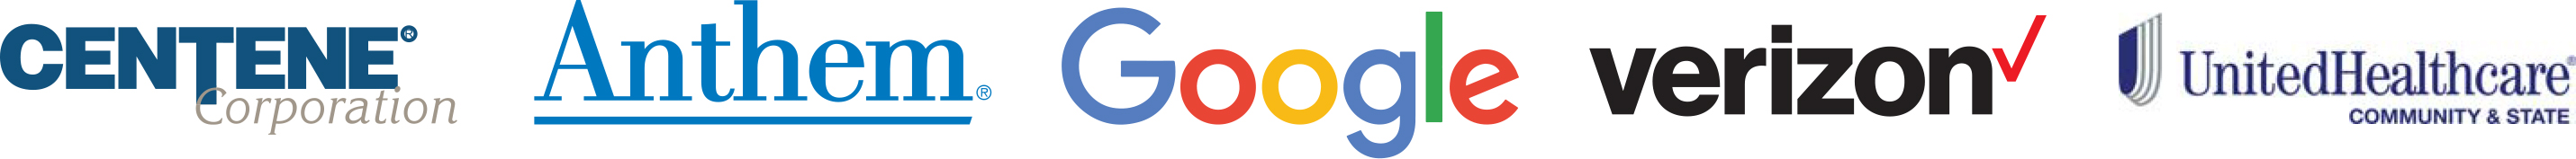 Top Sponsor Logos: Centene Corporation, Anthem, Google, Verizon, and United Healthcare - Community and State